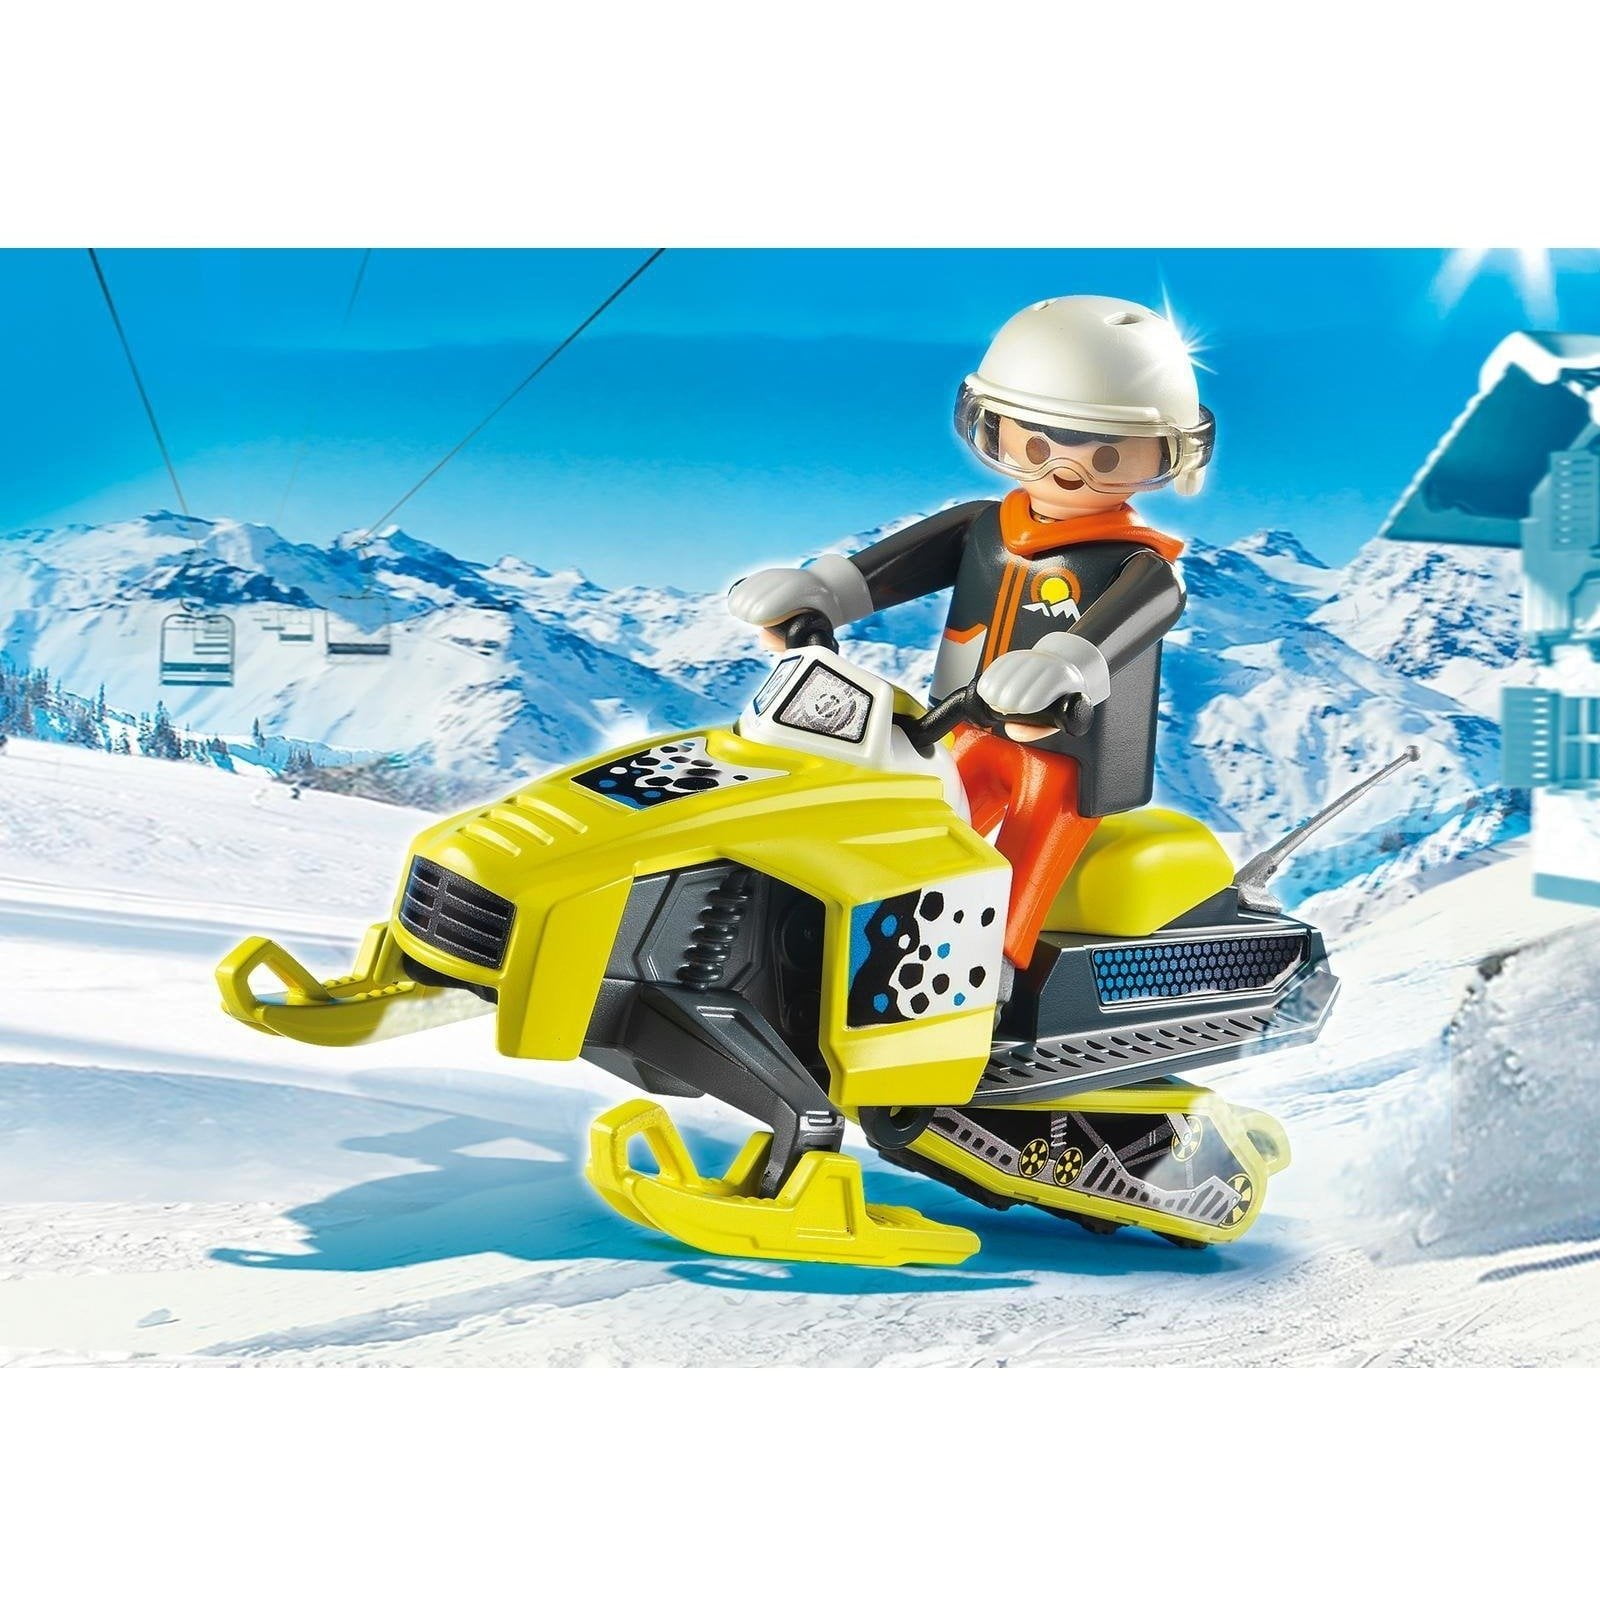 Playmobil 9284 Skier With Snowblades Multicolor